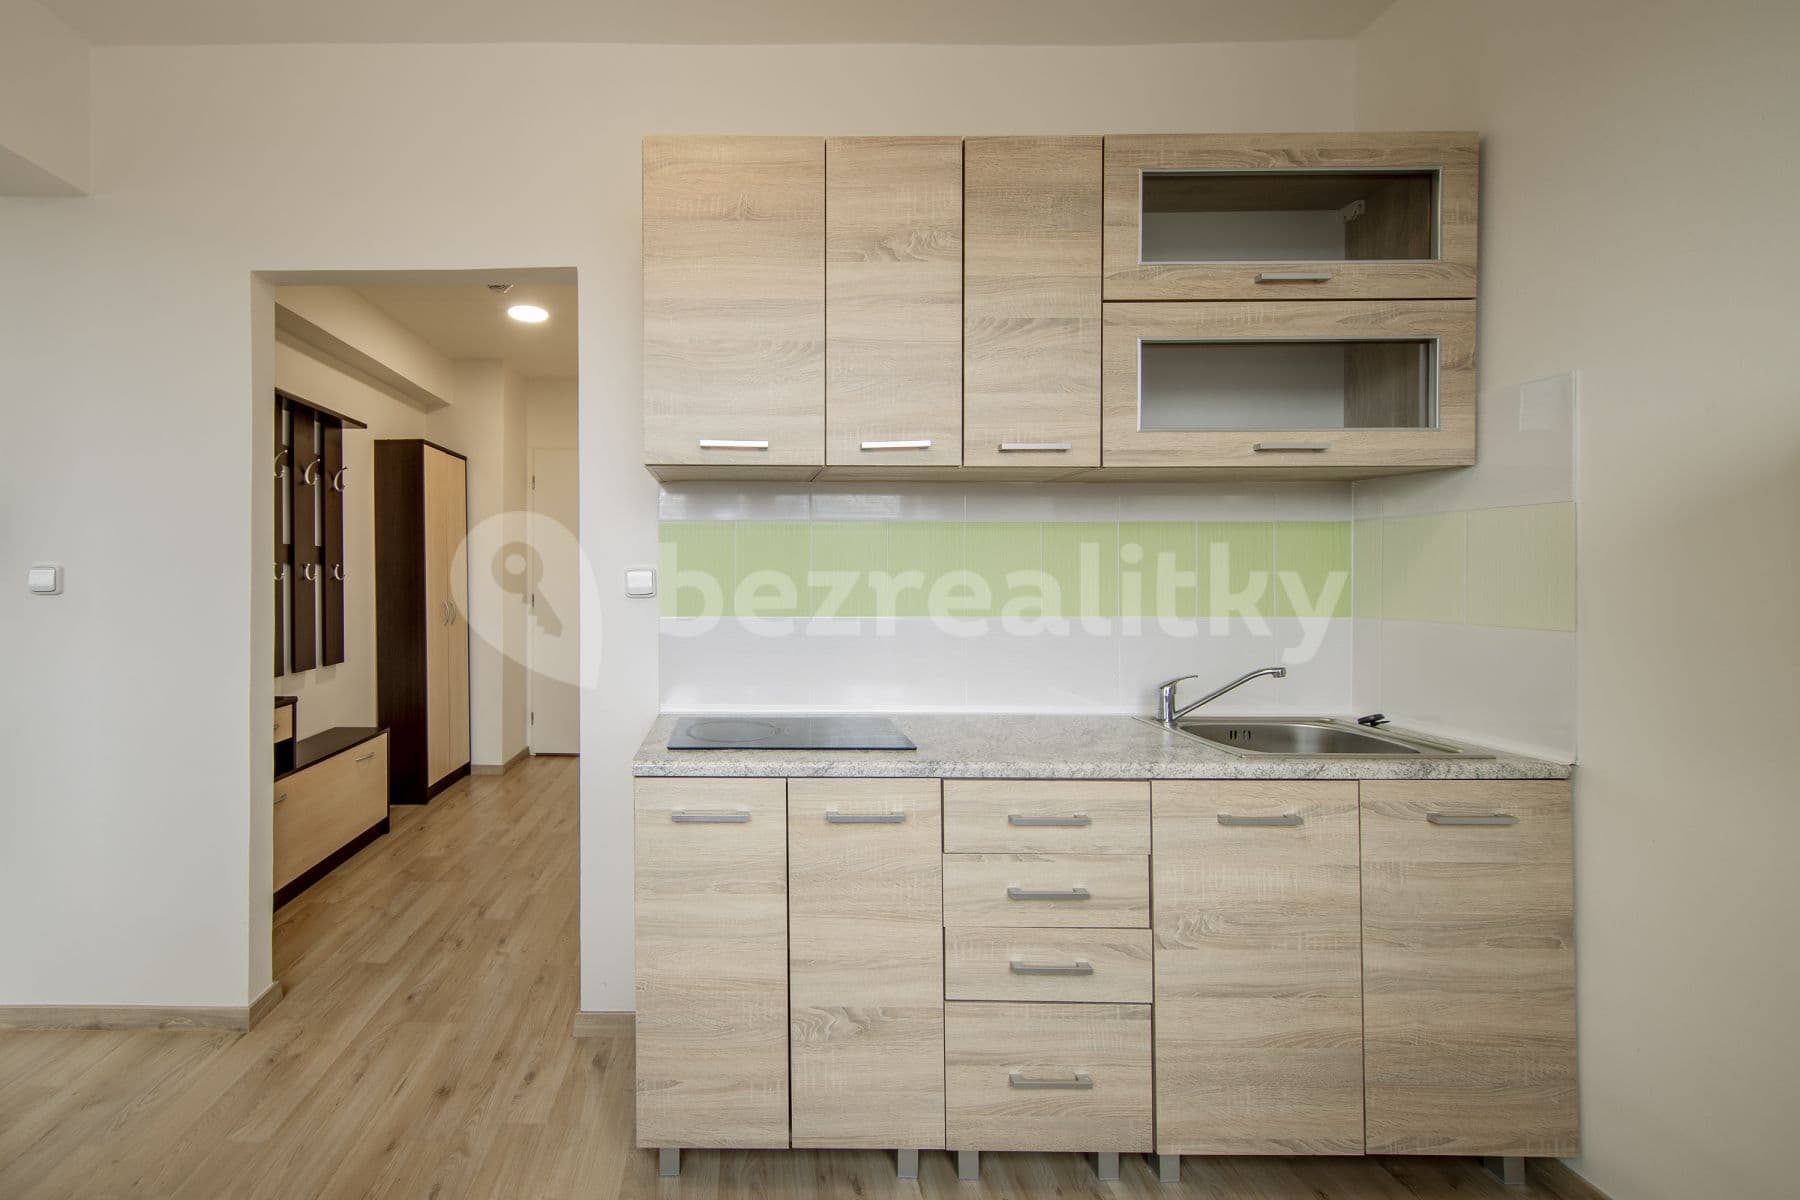 1 bedroom flat for sale, 31 m², Peroutkova, Prague, Prague